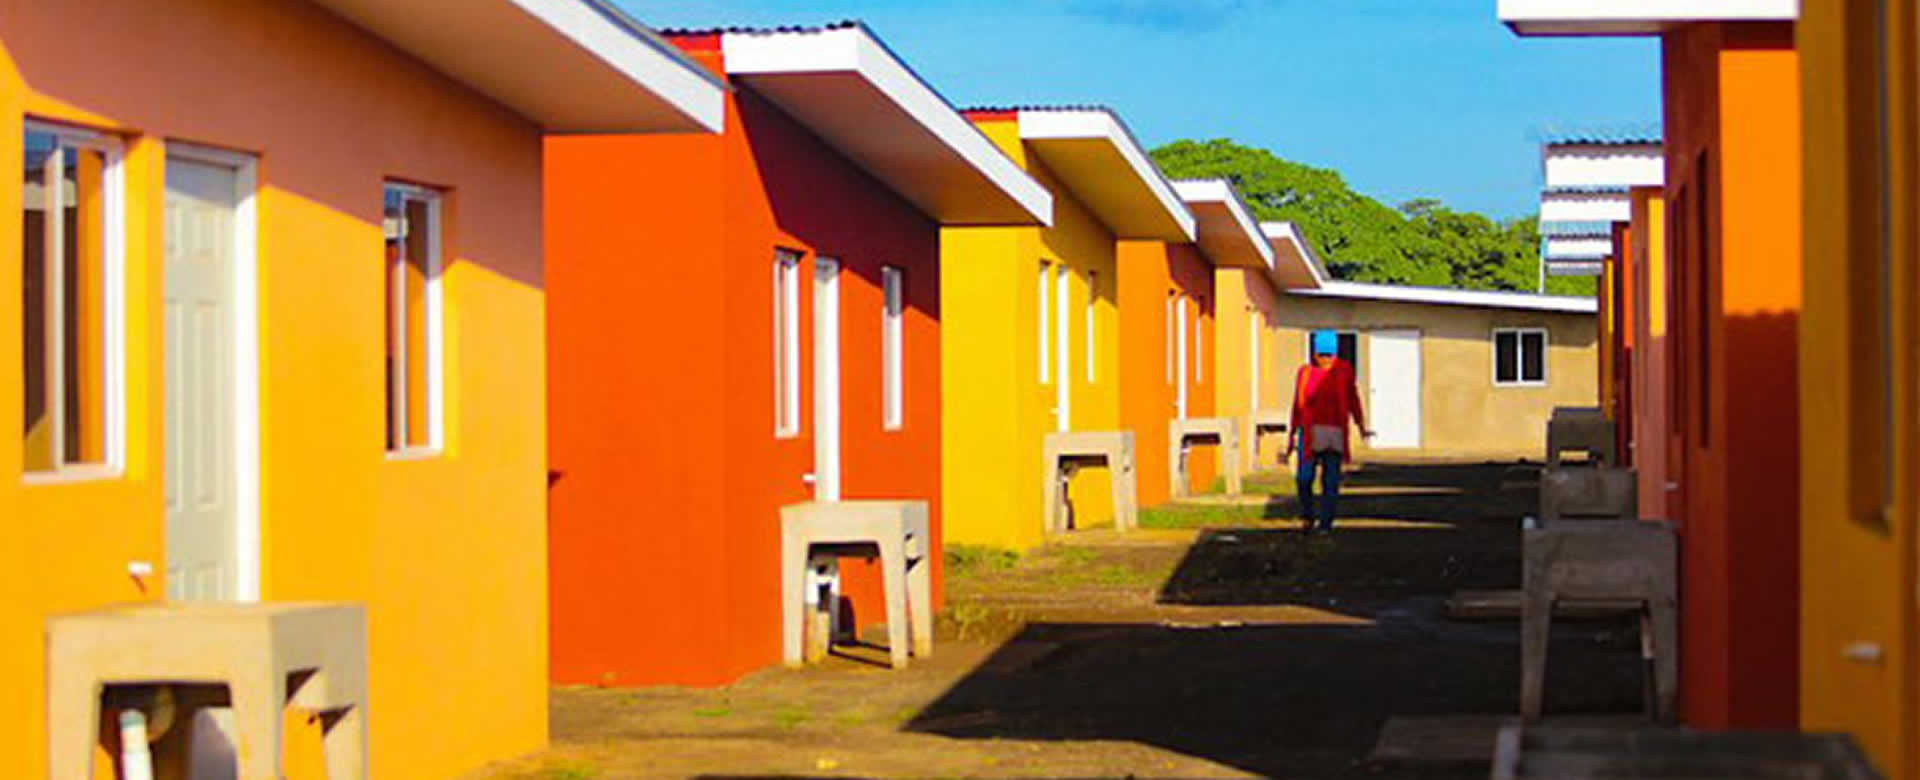 Nicaragua recibirá U$171.65 millones del BCIE para viviendas de interés social